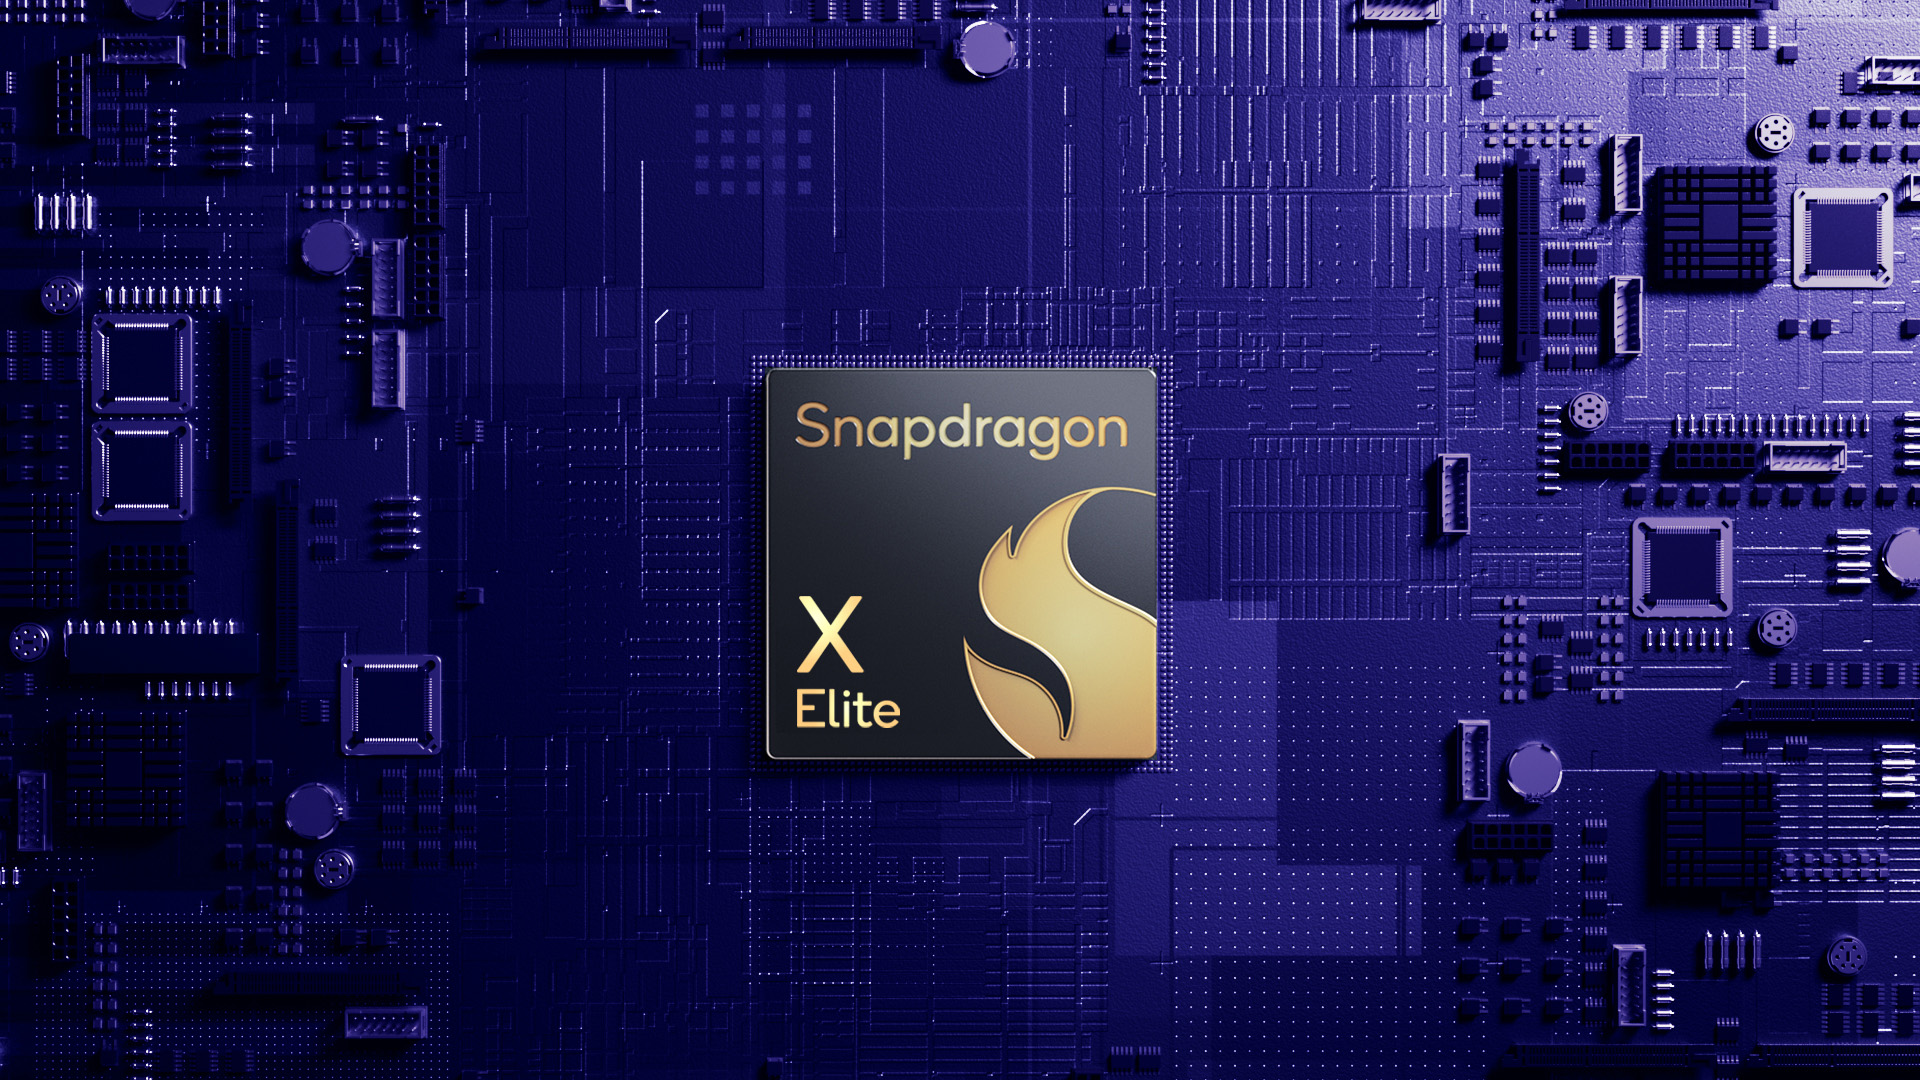 Qualcomm Snapdragon X Elite chip press image